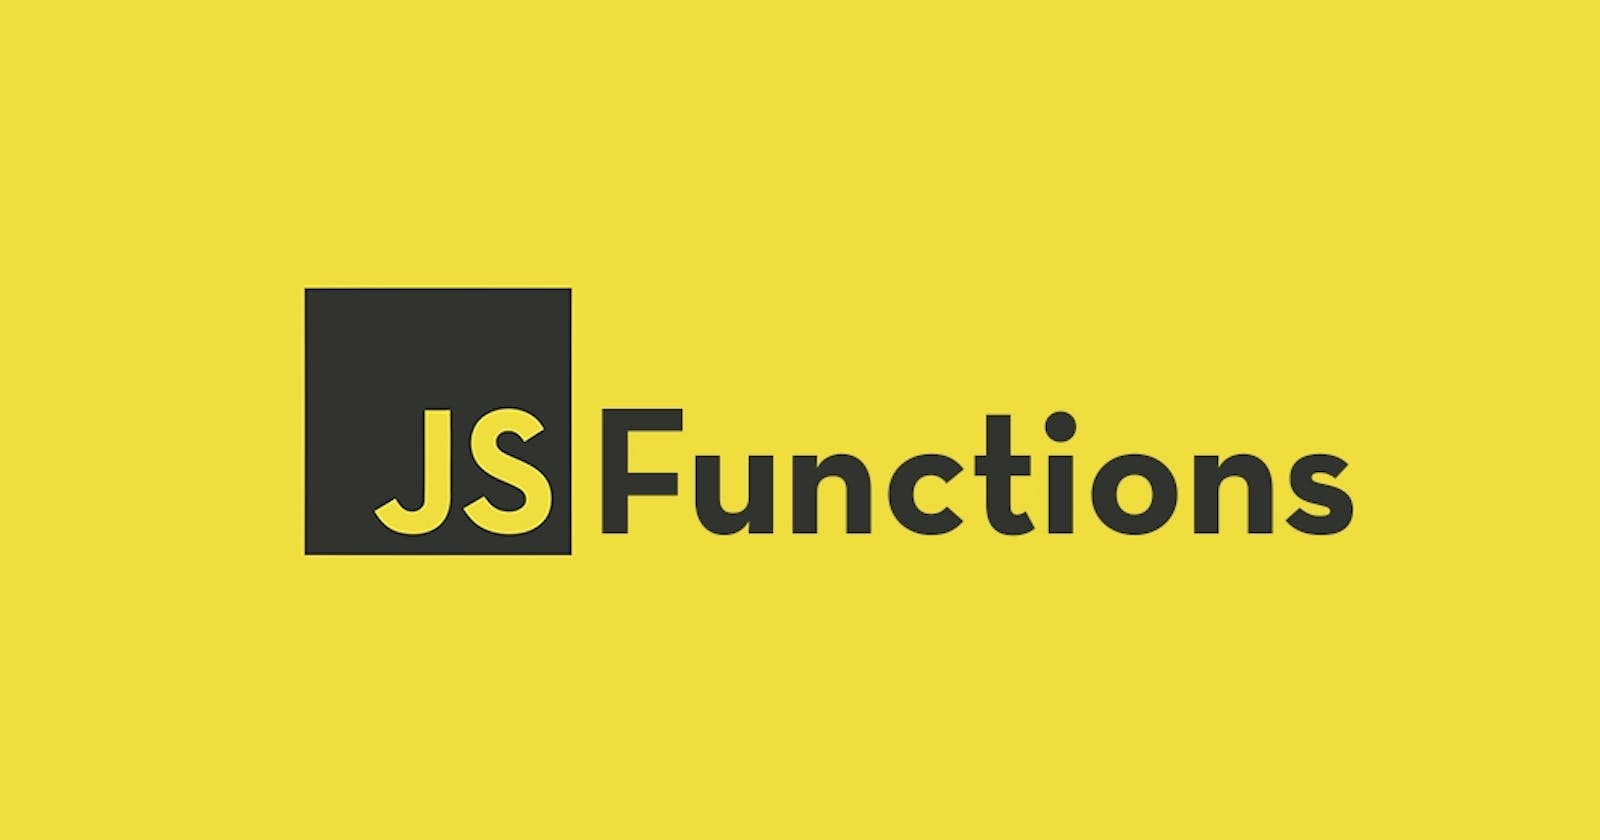 Javascript functions